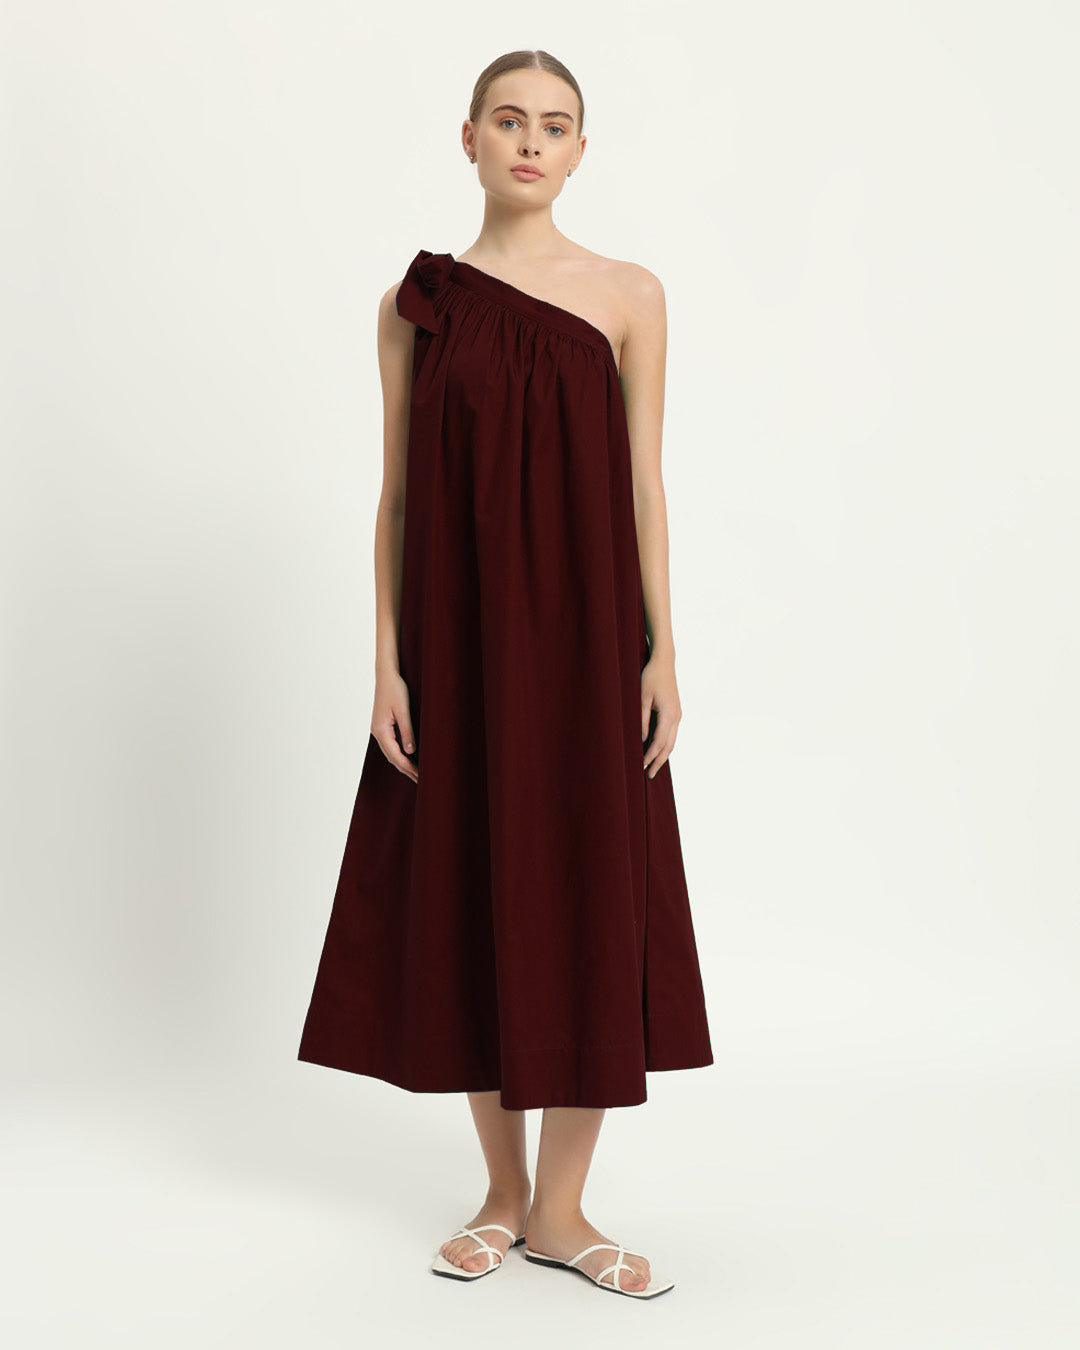 The Strehla Rouge Cotton Dress